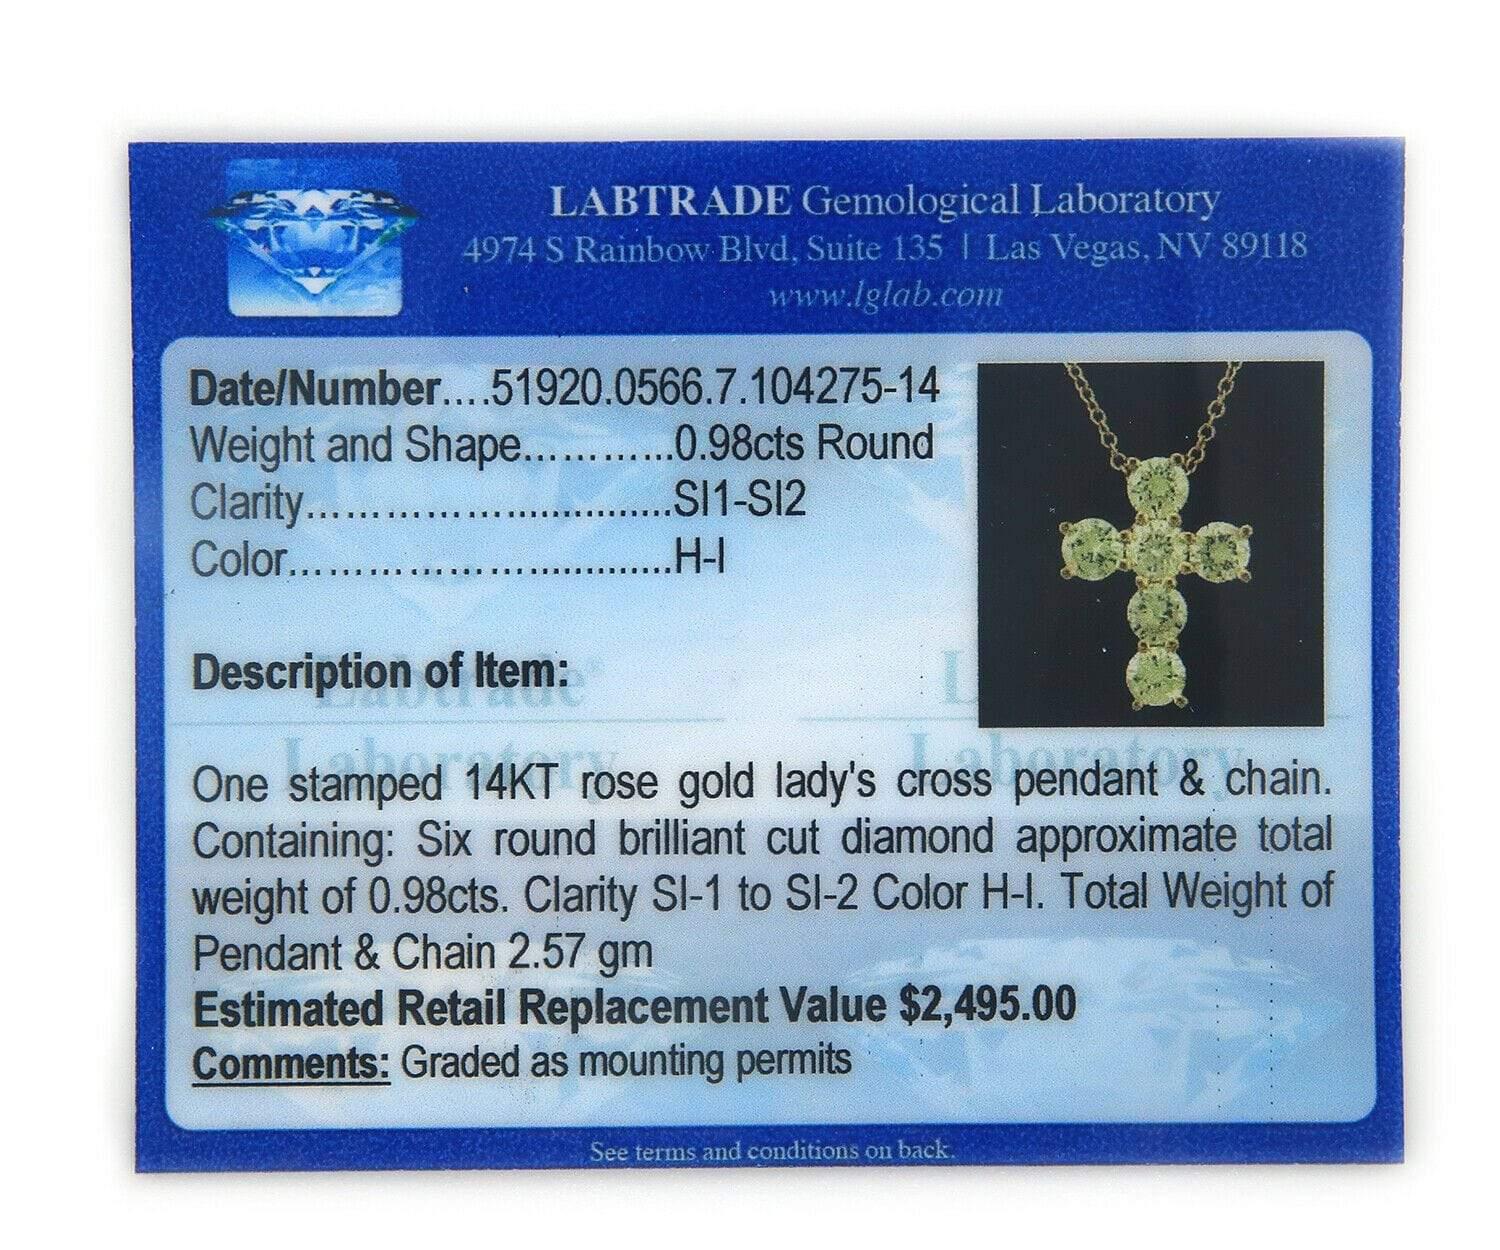 0.98ctw Diamond Cross Pendant Necklace 14K

Diamond Cross Pendant Necklace
14K Rose Gold
Diamond Weight (Approx.): 0.98ctw
Diamond Clarity: SI1 – SI2
Diamond Color: H - I
Chain Length: 18.0 Inches
Pendant Size: 11mm x 14mm
LGL Certified
Necklace